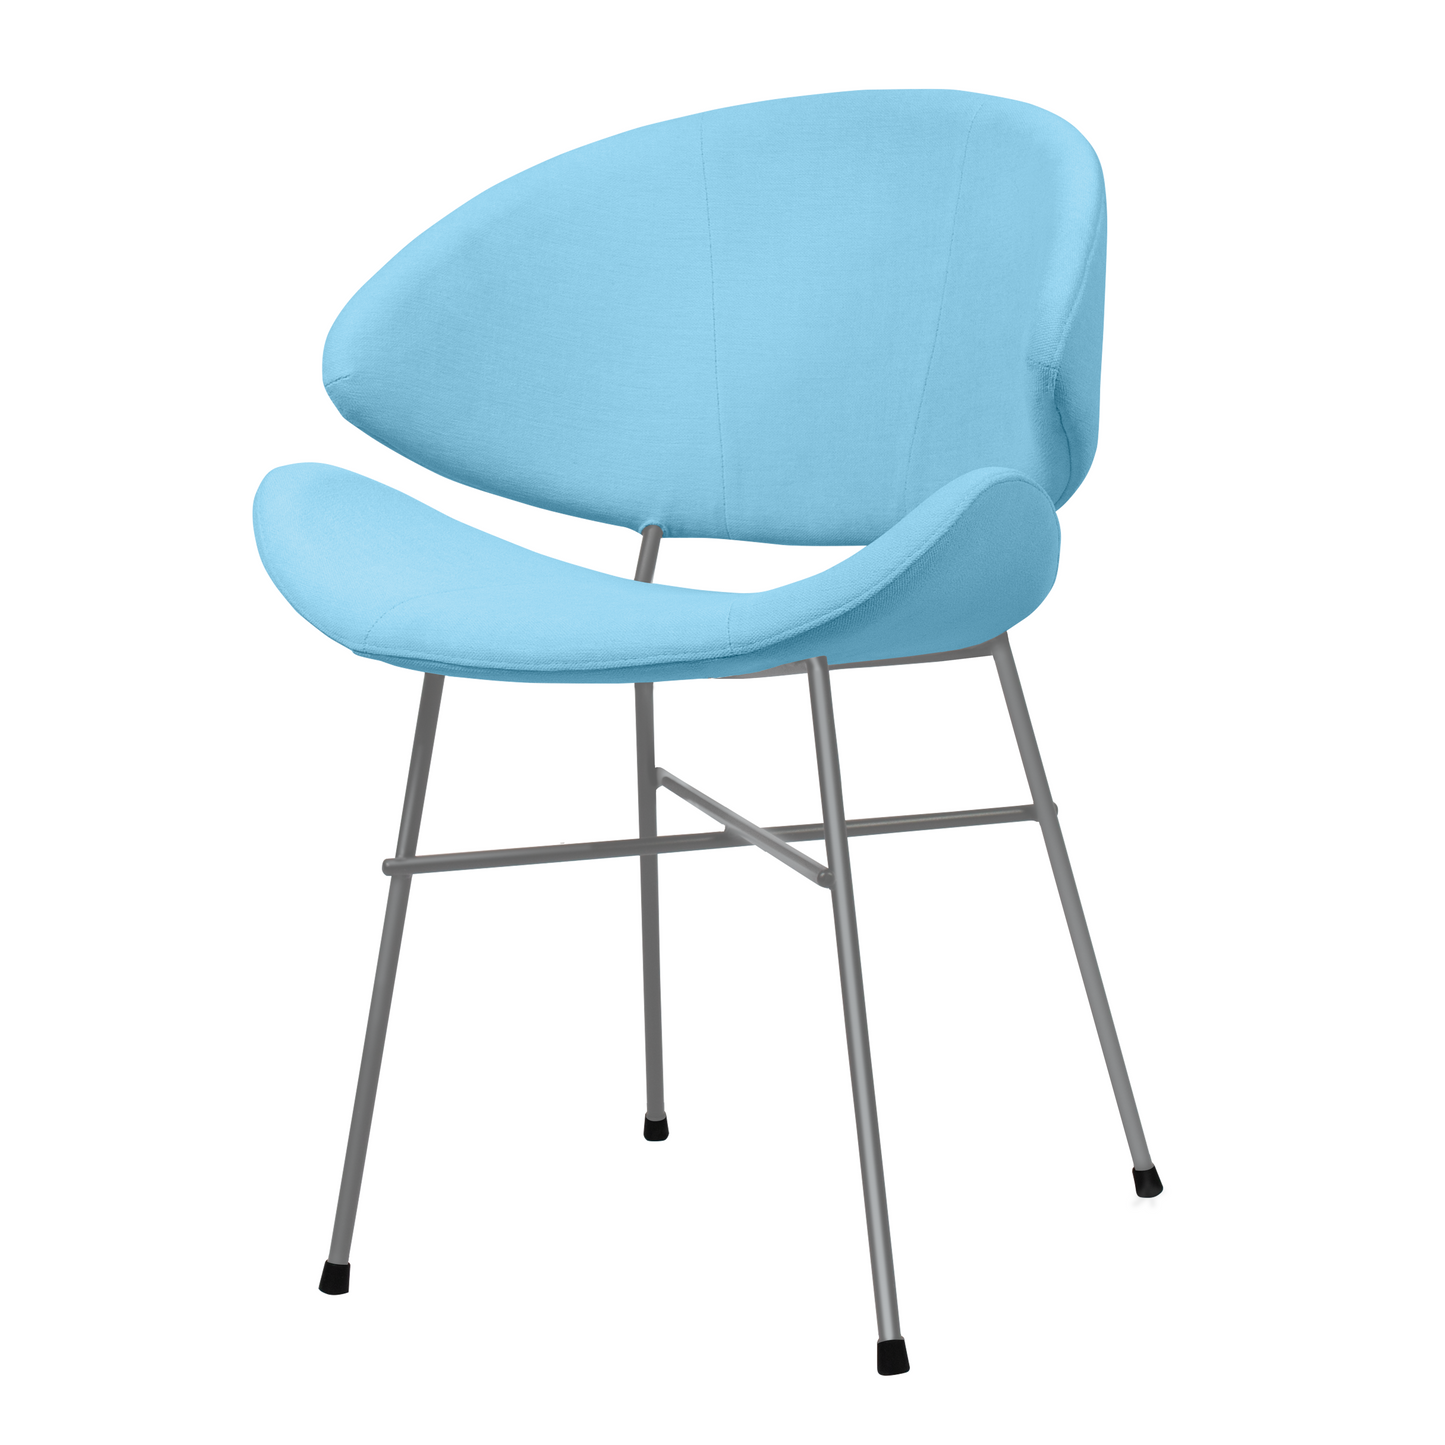 Chair Cheri Trend - Light Blue